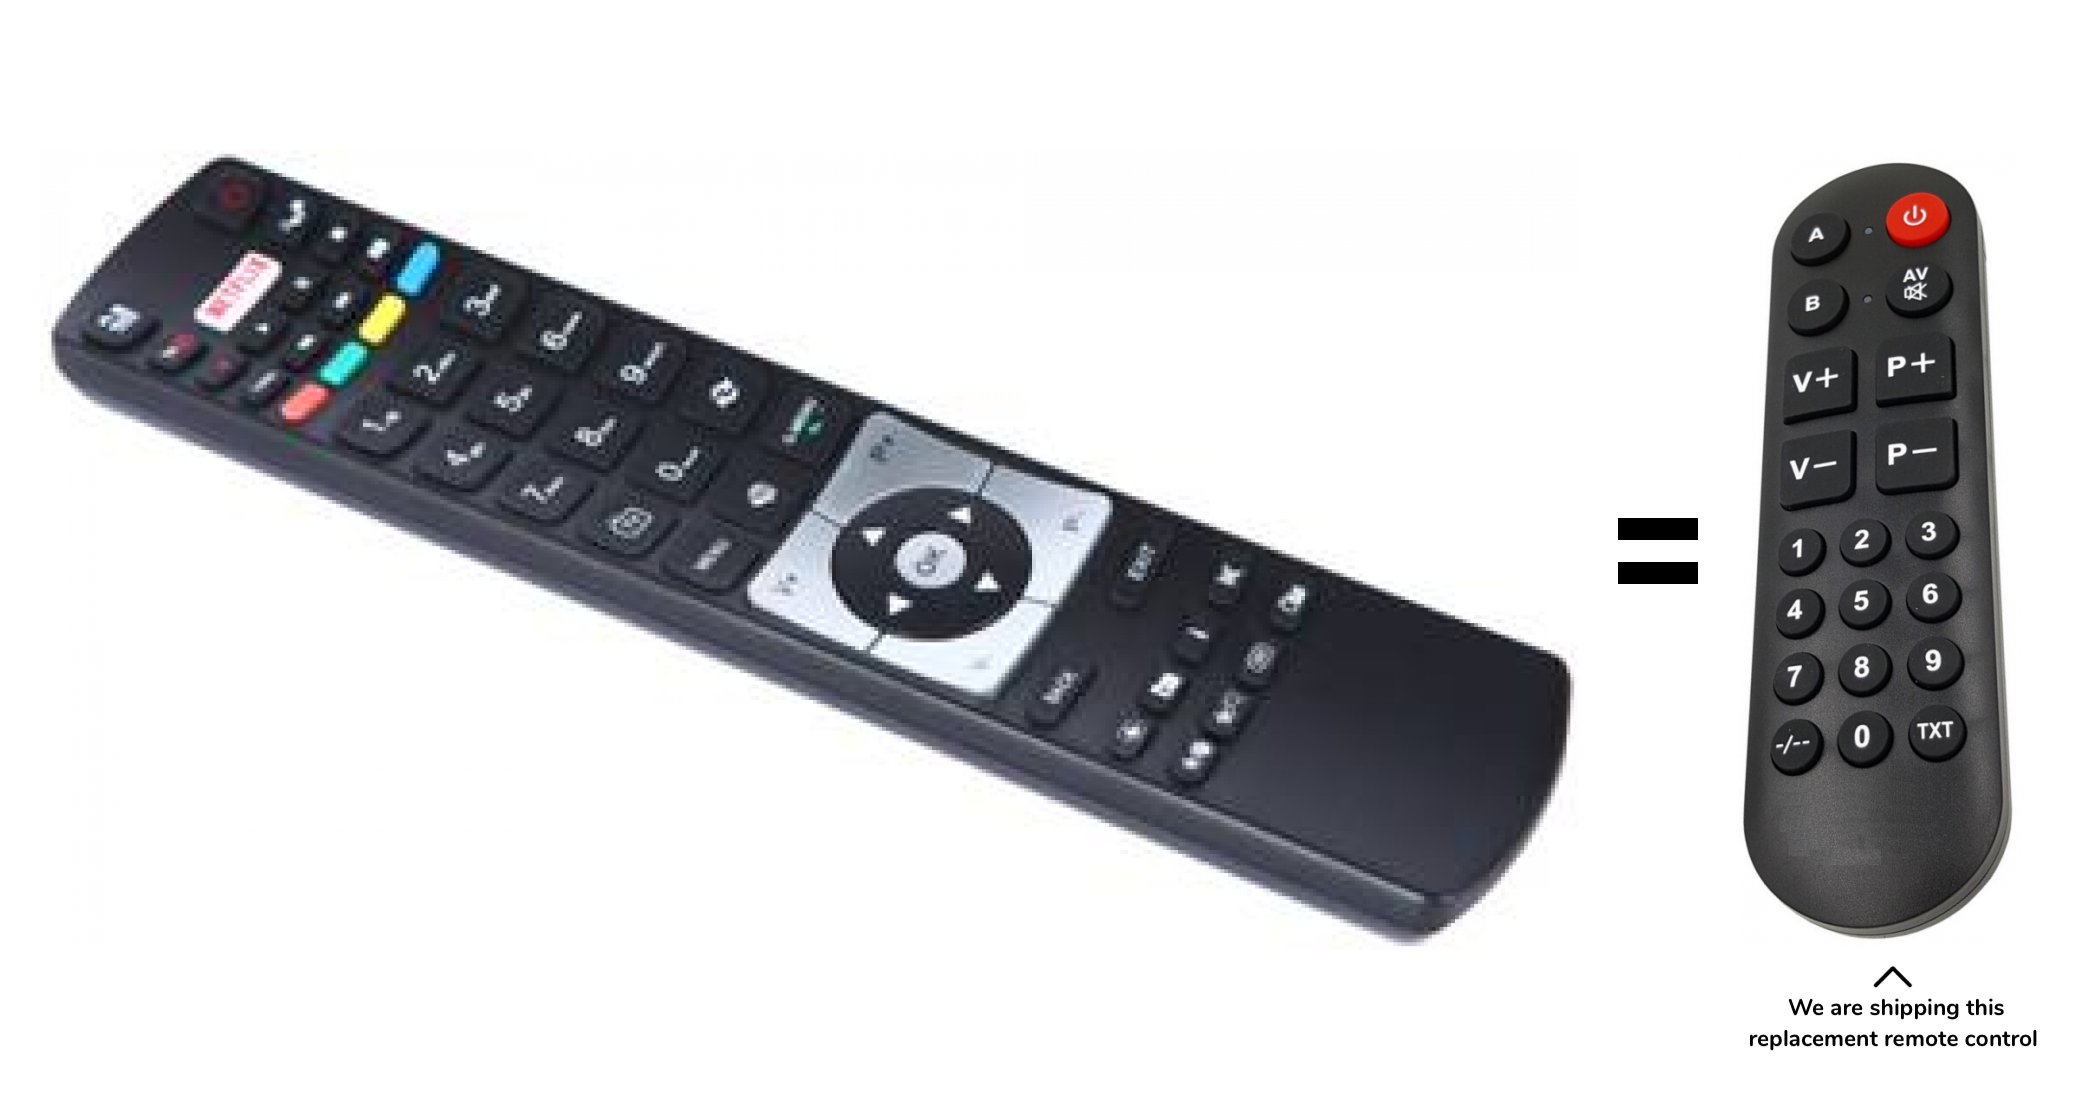 Technika RC5118 remote control for seniors